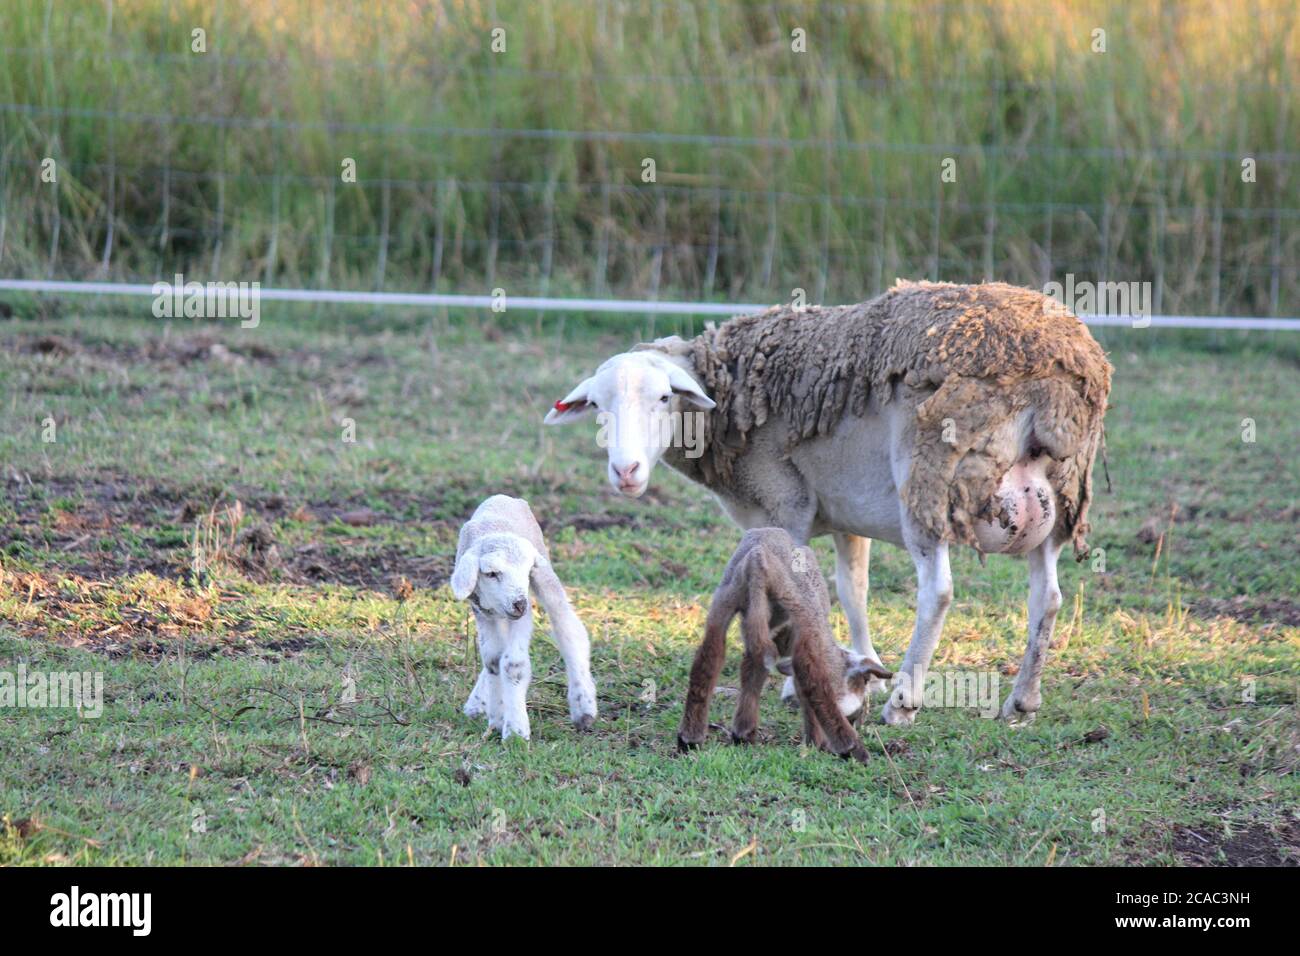 Australian Sheep on a Farm in the paddocks Stock Photo